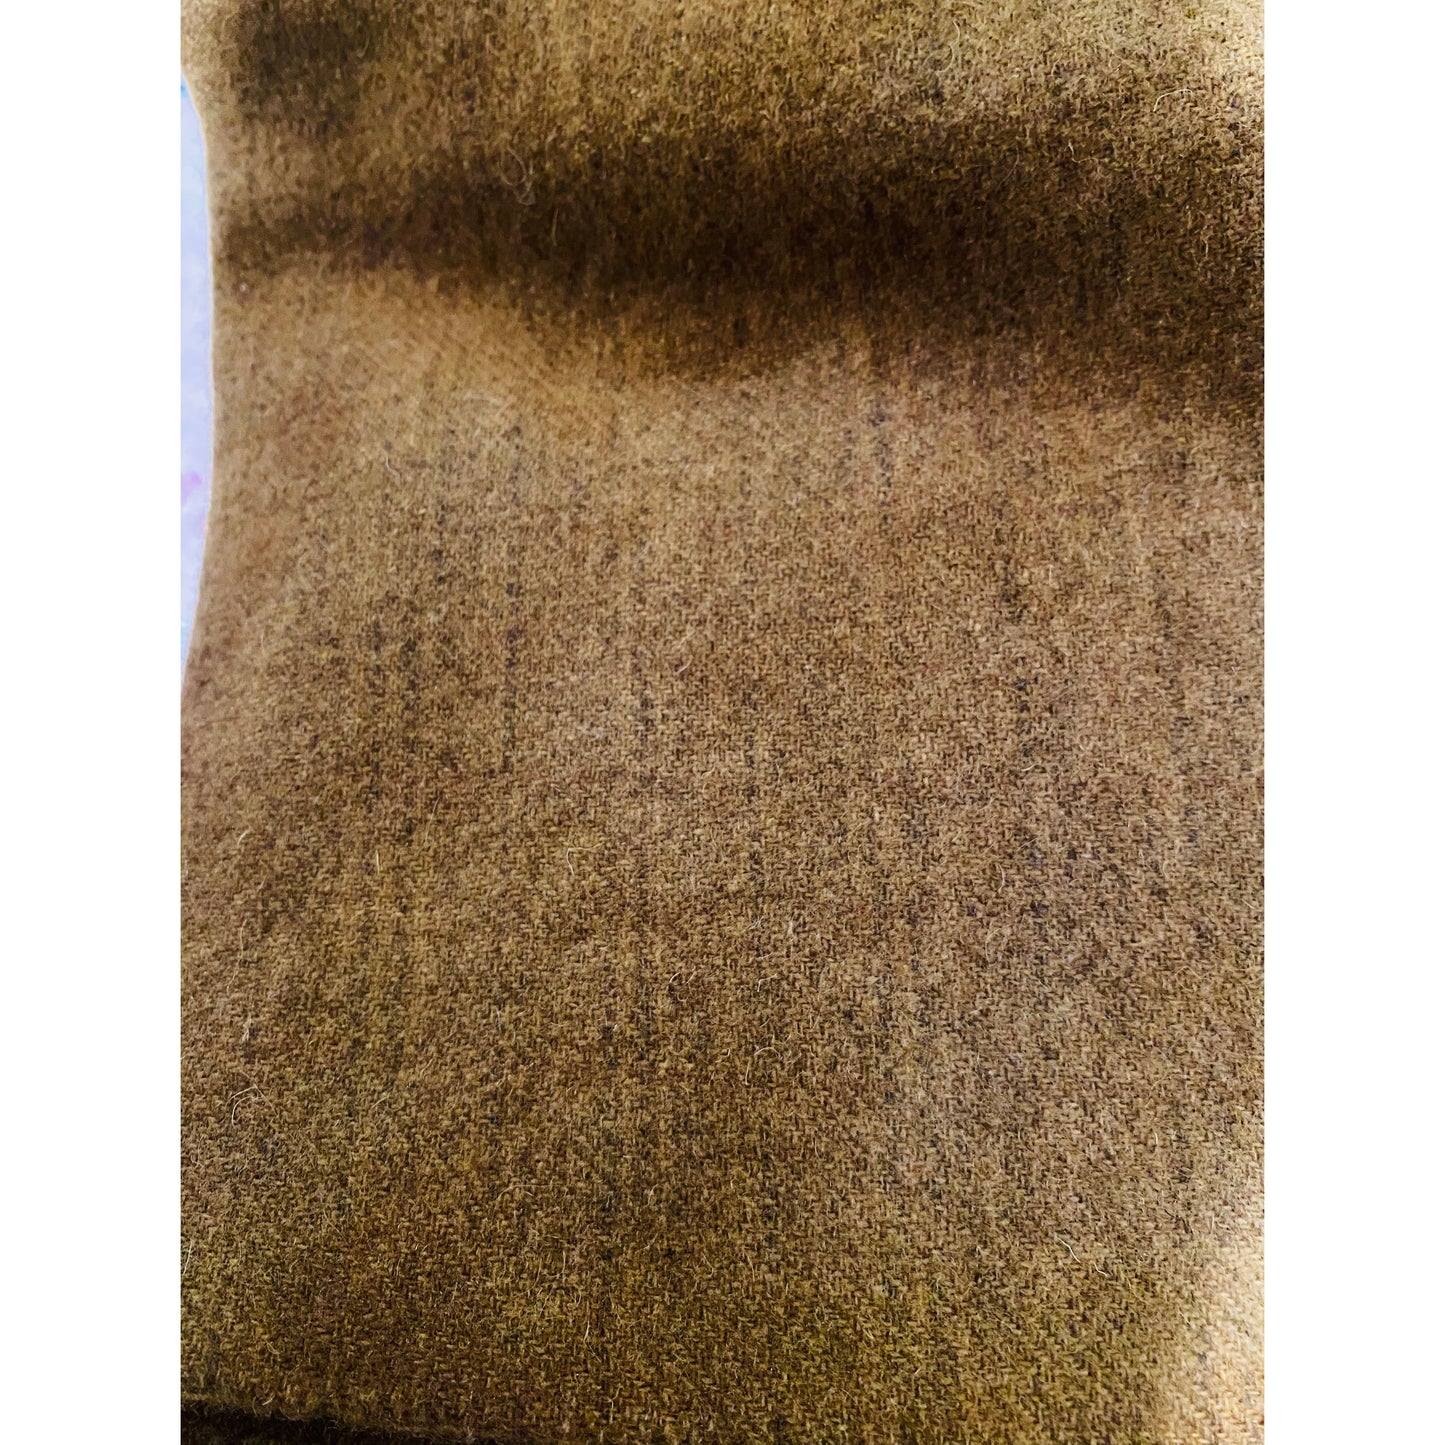 Blackberry Primitives ~ Butterscotch TEXTURED Hand-Dyed Wool Fabric Fat Quarter